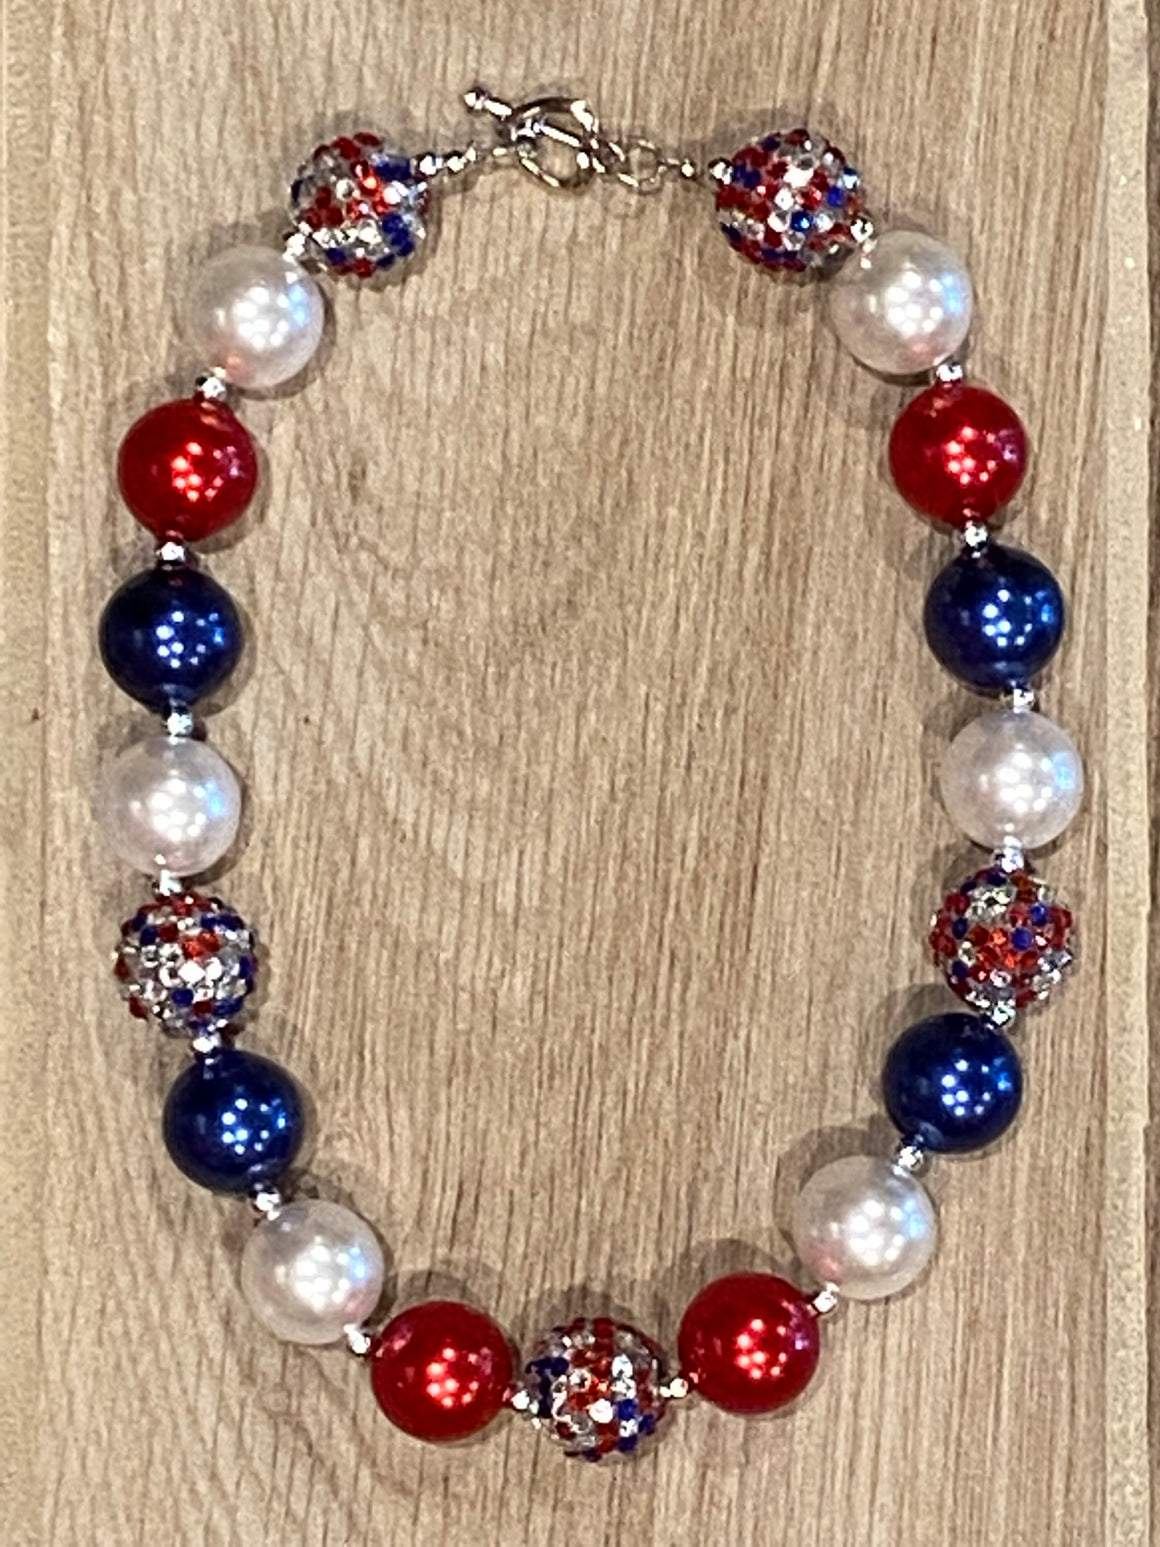 Necklace - Red/White/Blue Rhinestone